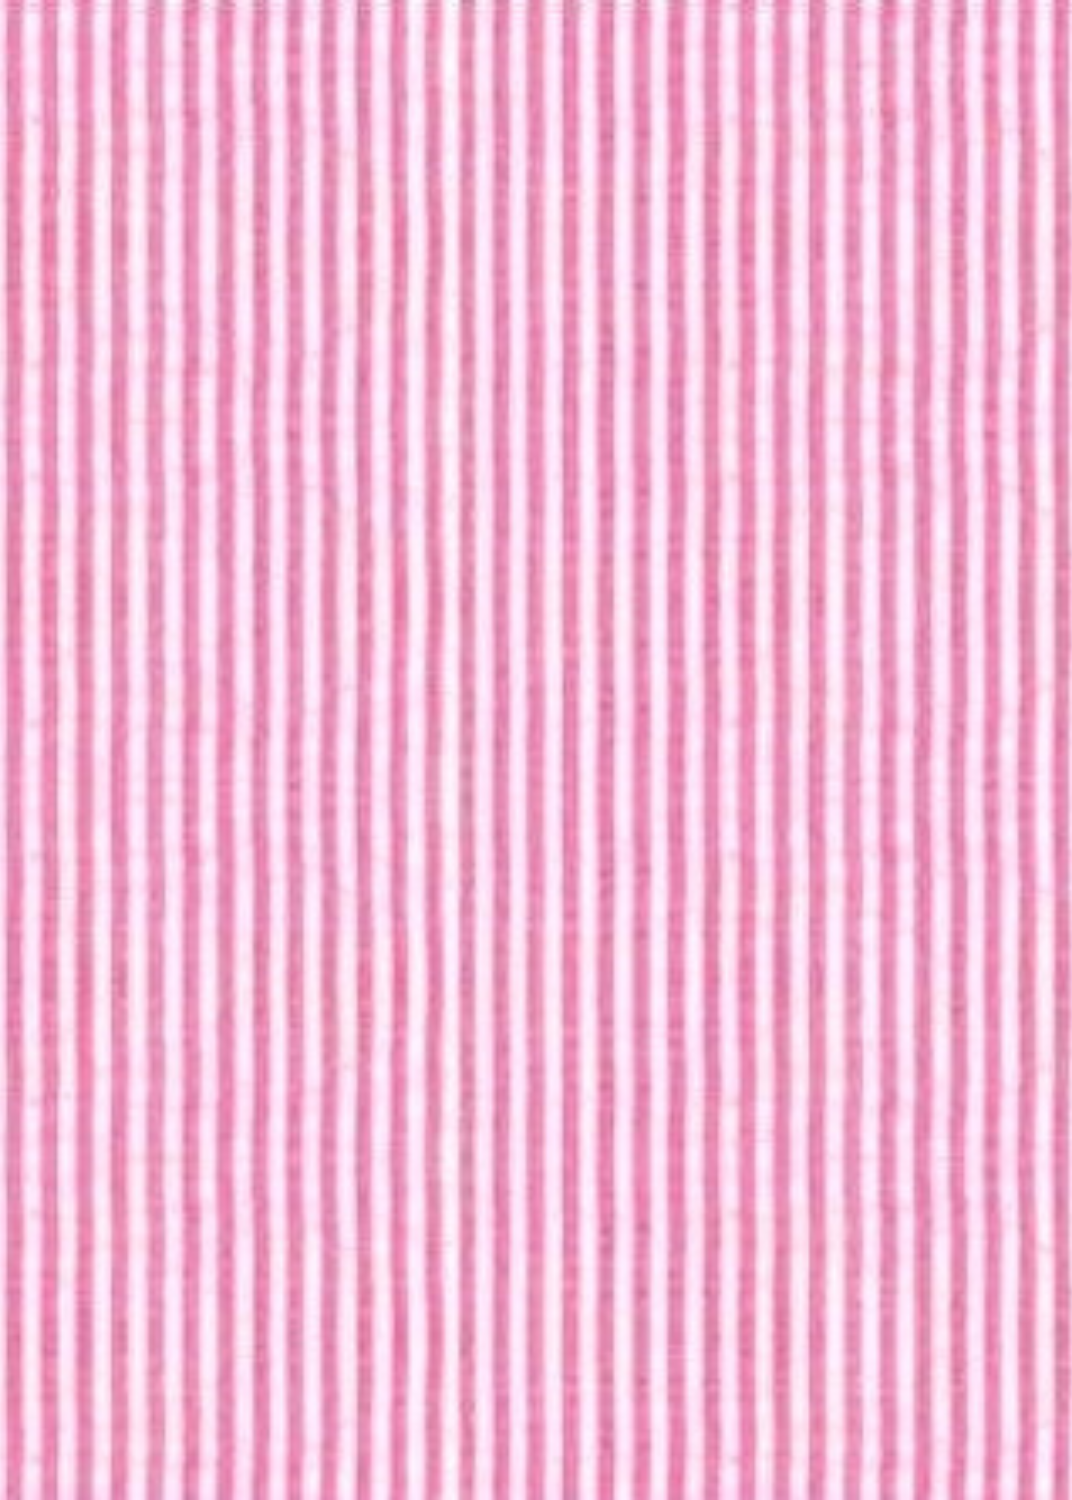 Placemat, Scalloped Edge - Hot Pink Seersucker/Blue